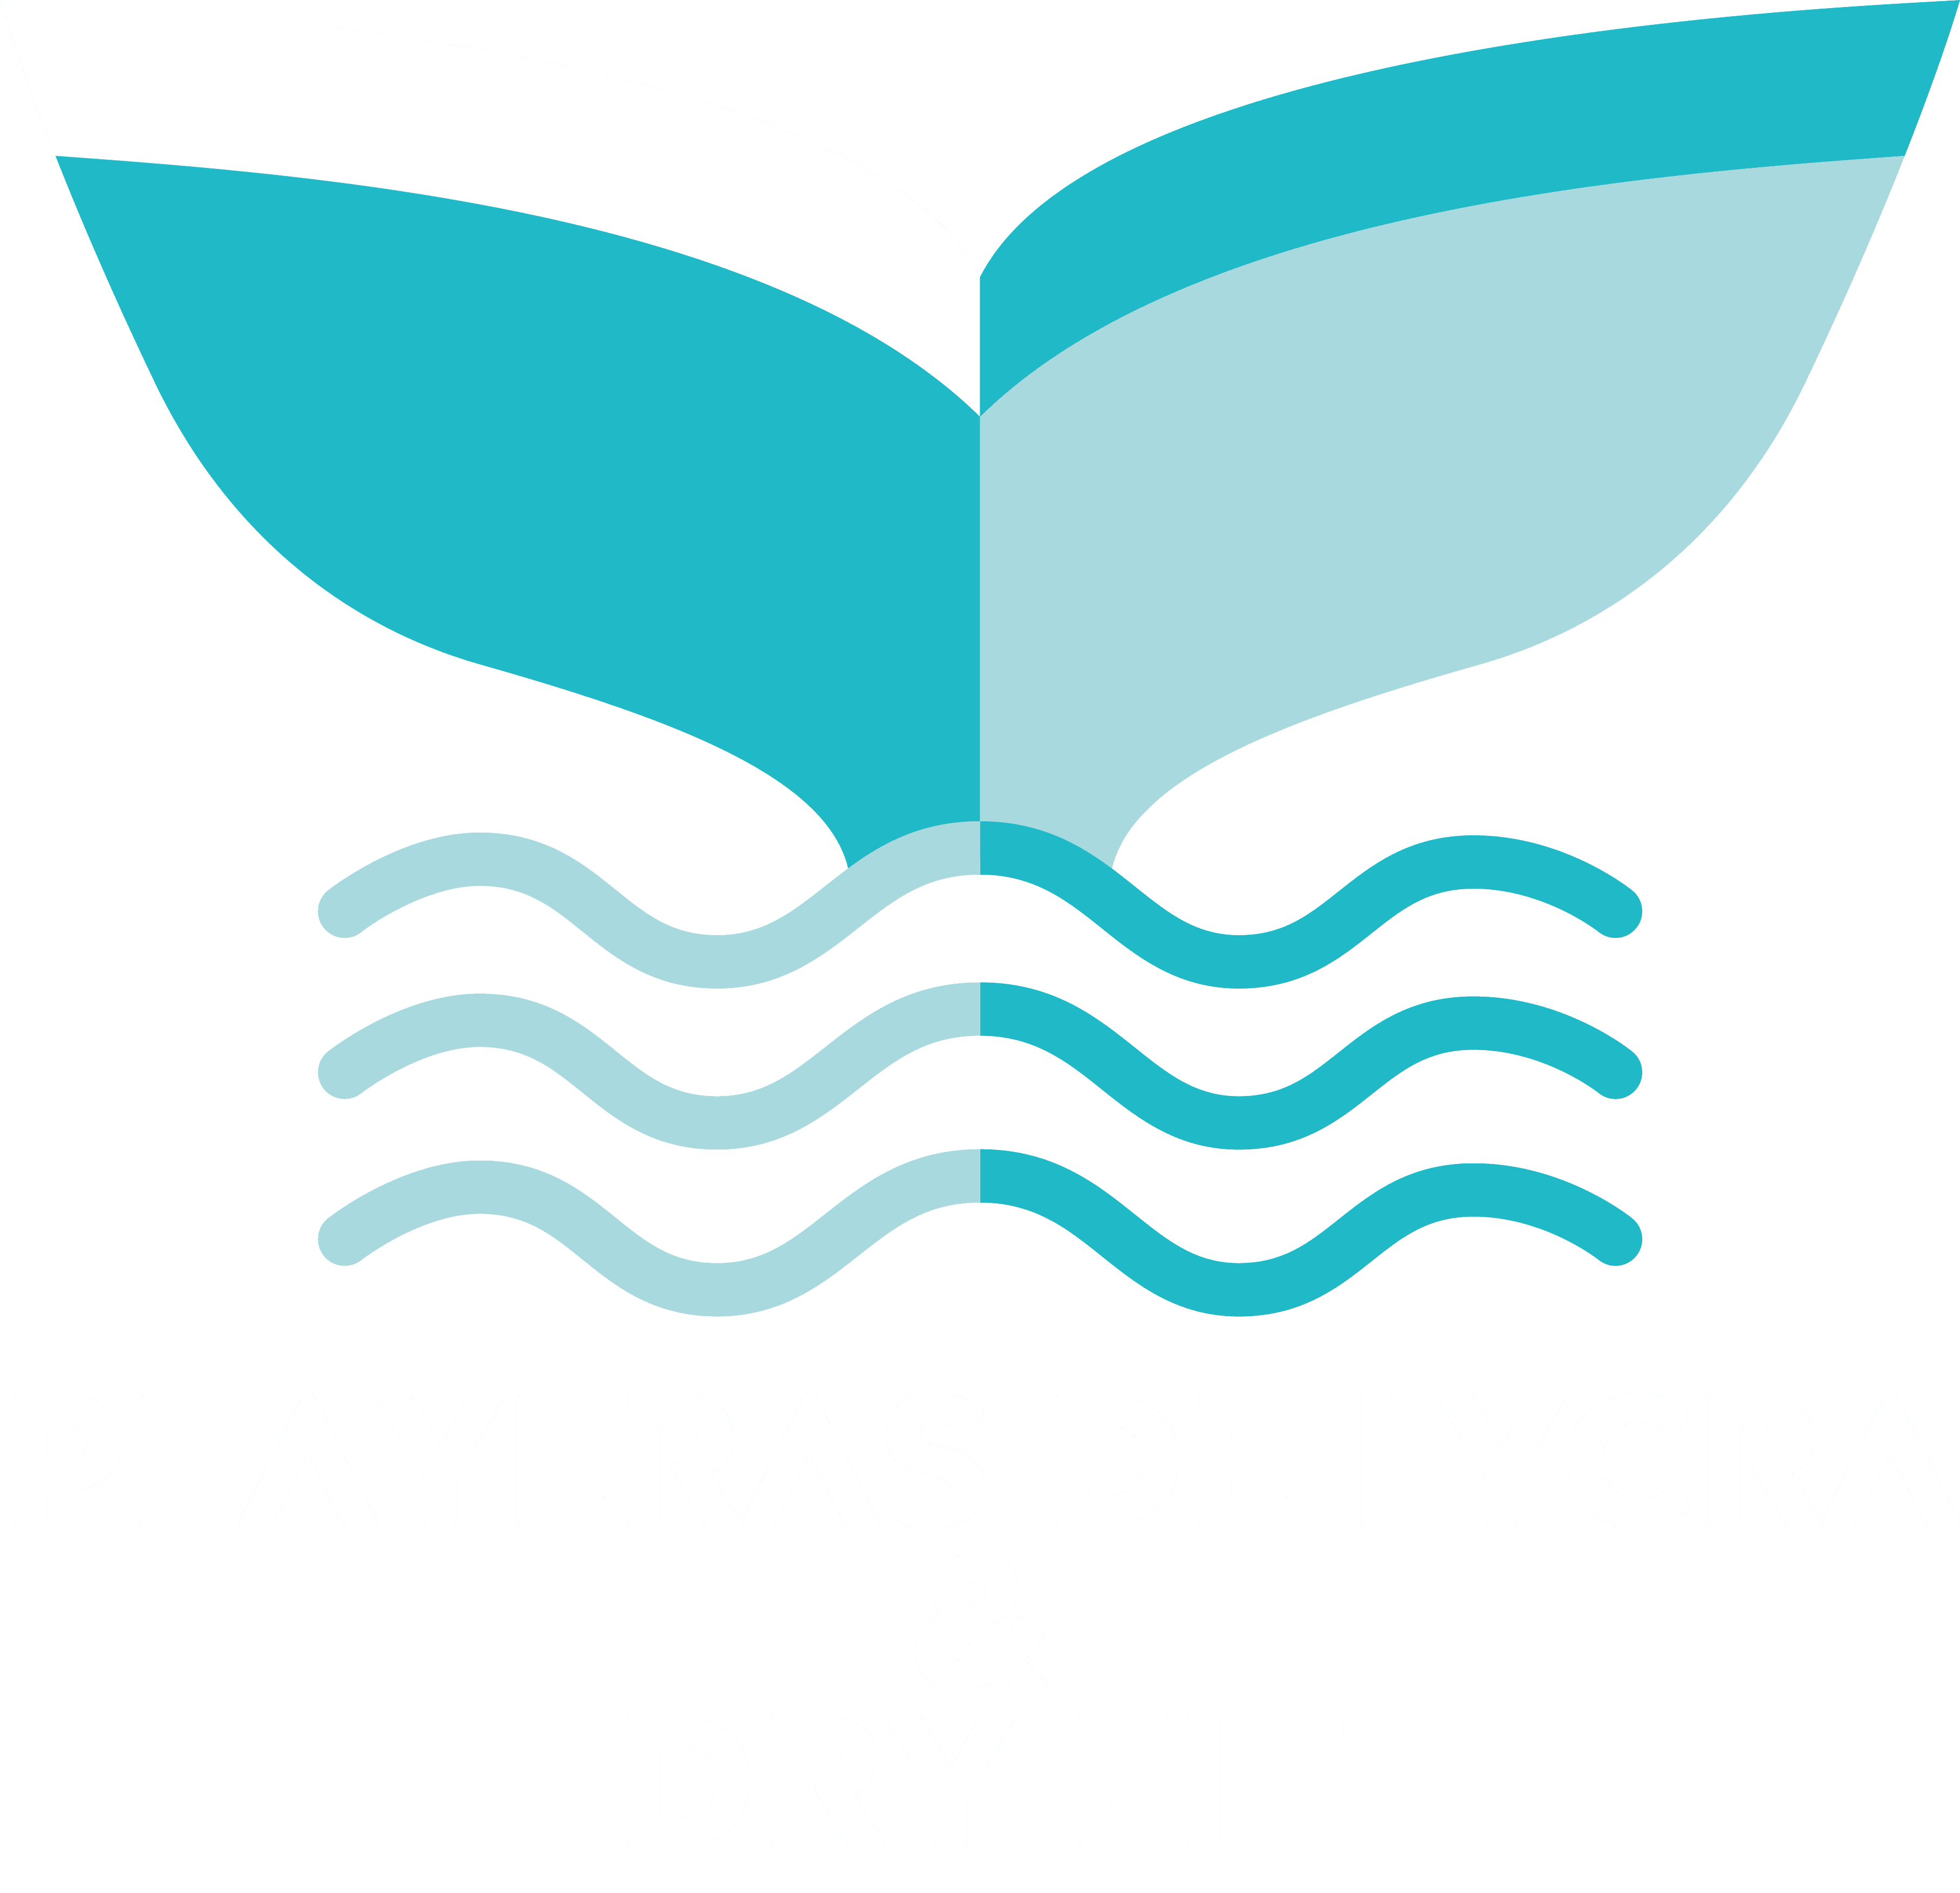 Playeras de Lycra & Dry Fit